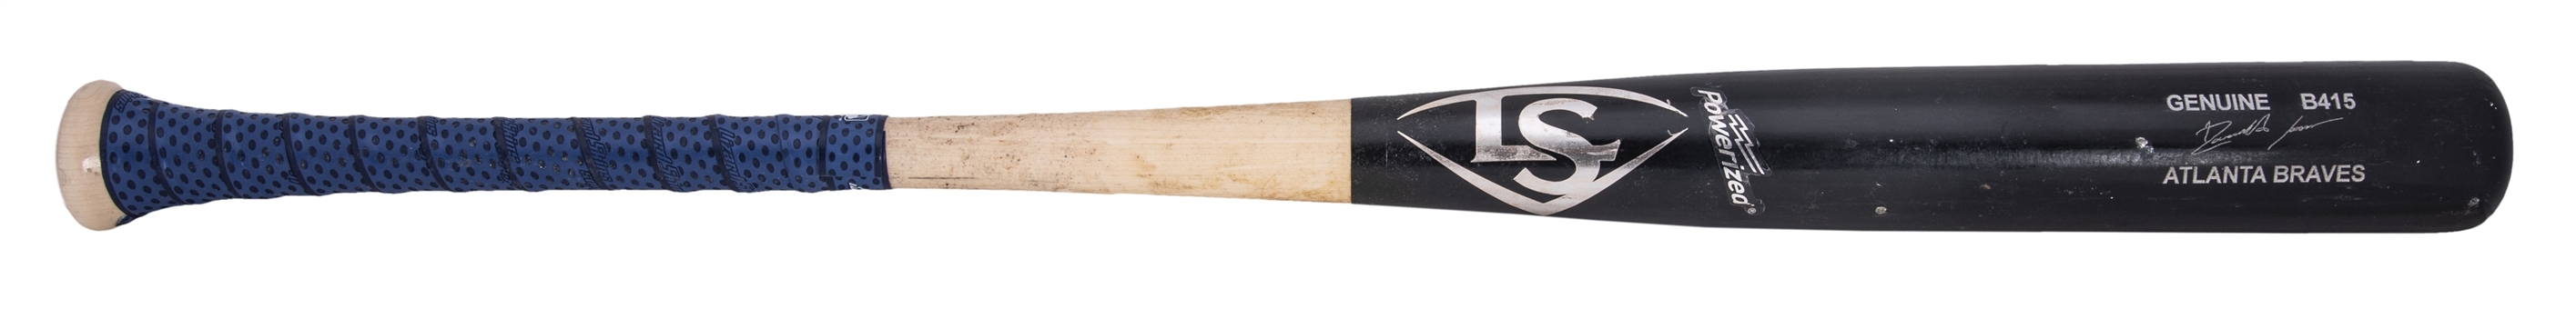 2018 Ronald Acuna Rookie Game Used Louisville Slugger B415 Model Bat (PSA/DNA GU 9)